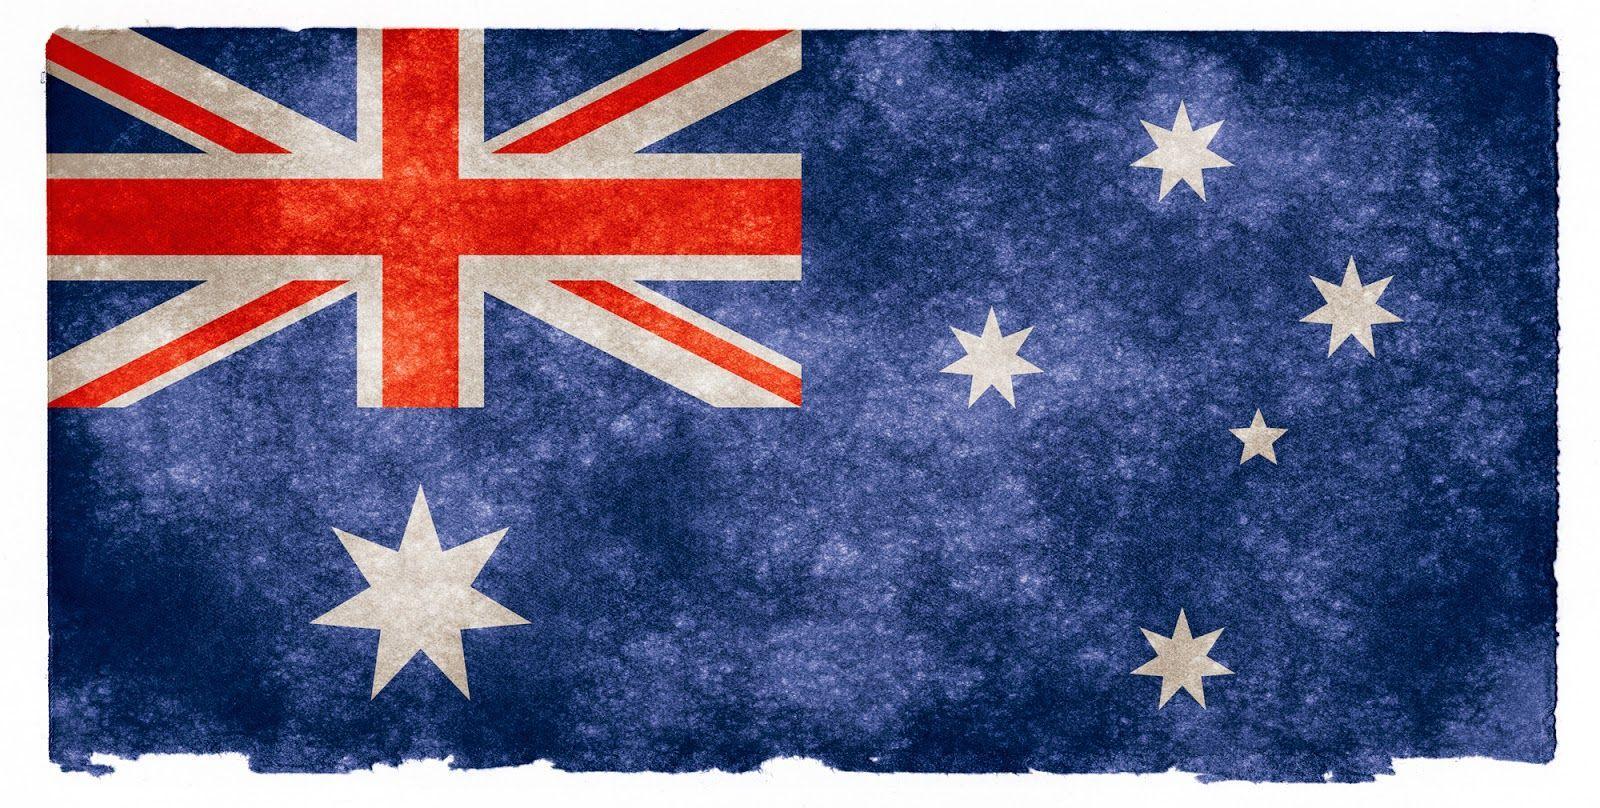 New Zealand Flag Wallpaper